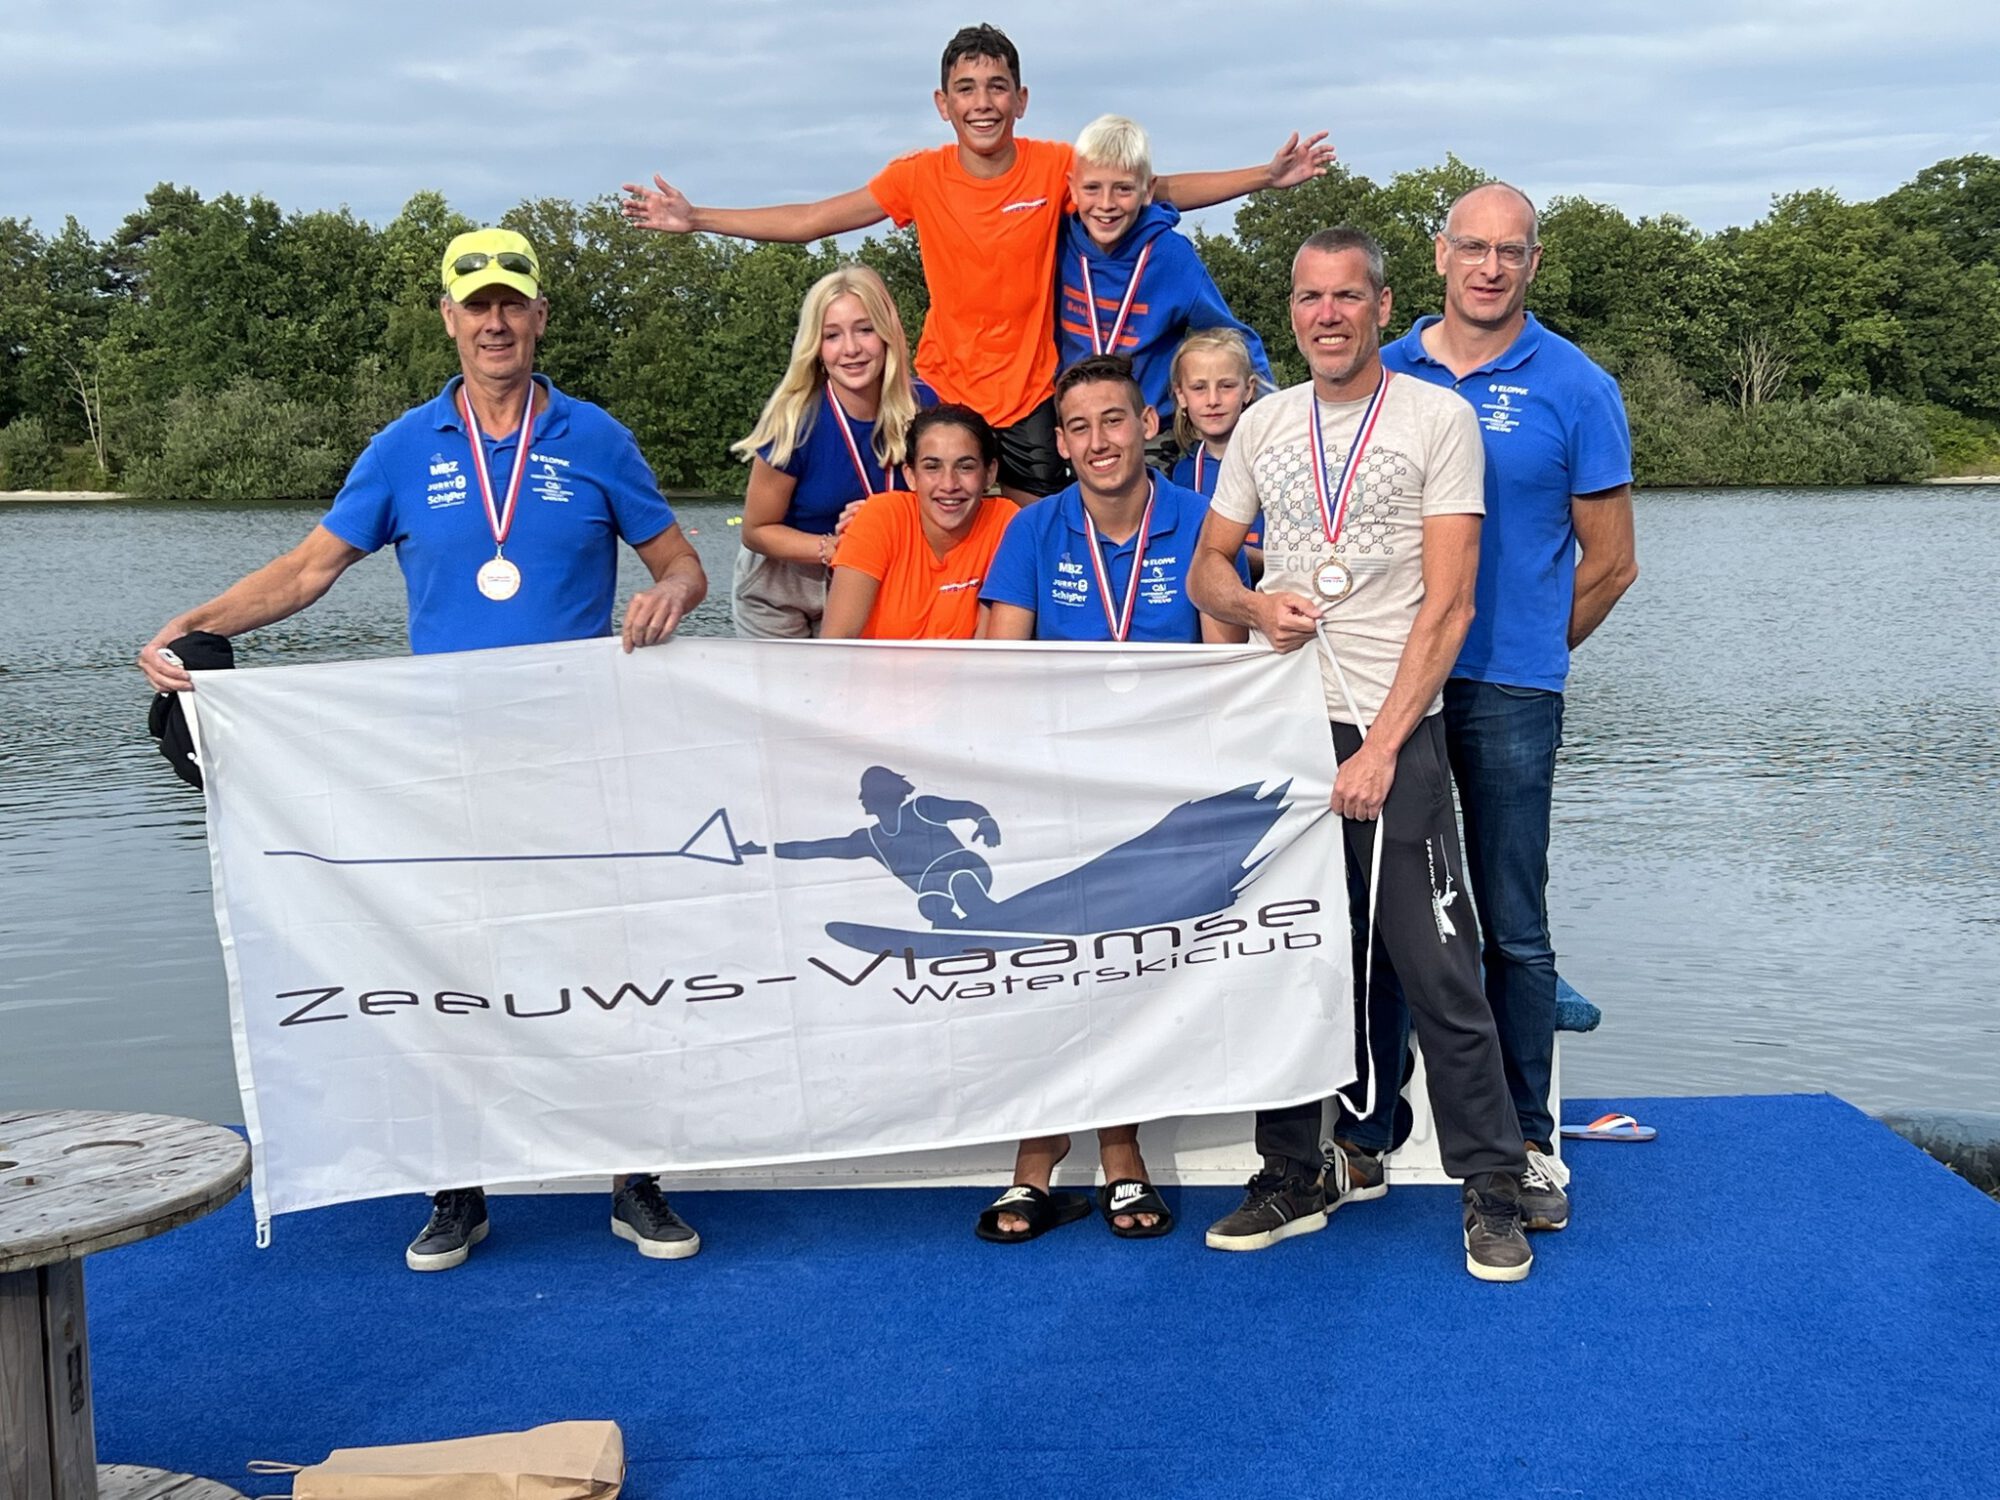 Zeeuws-Vlaamse Waterskiclub